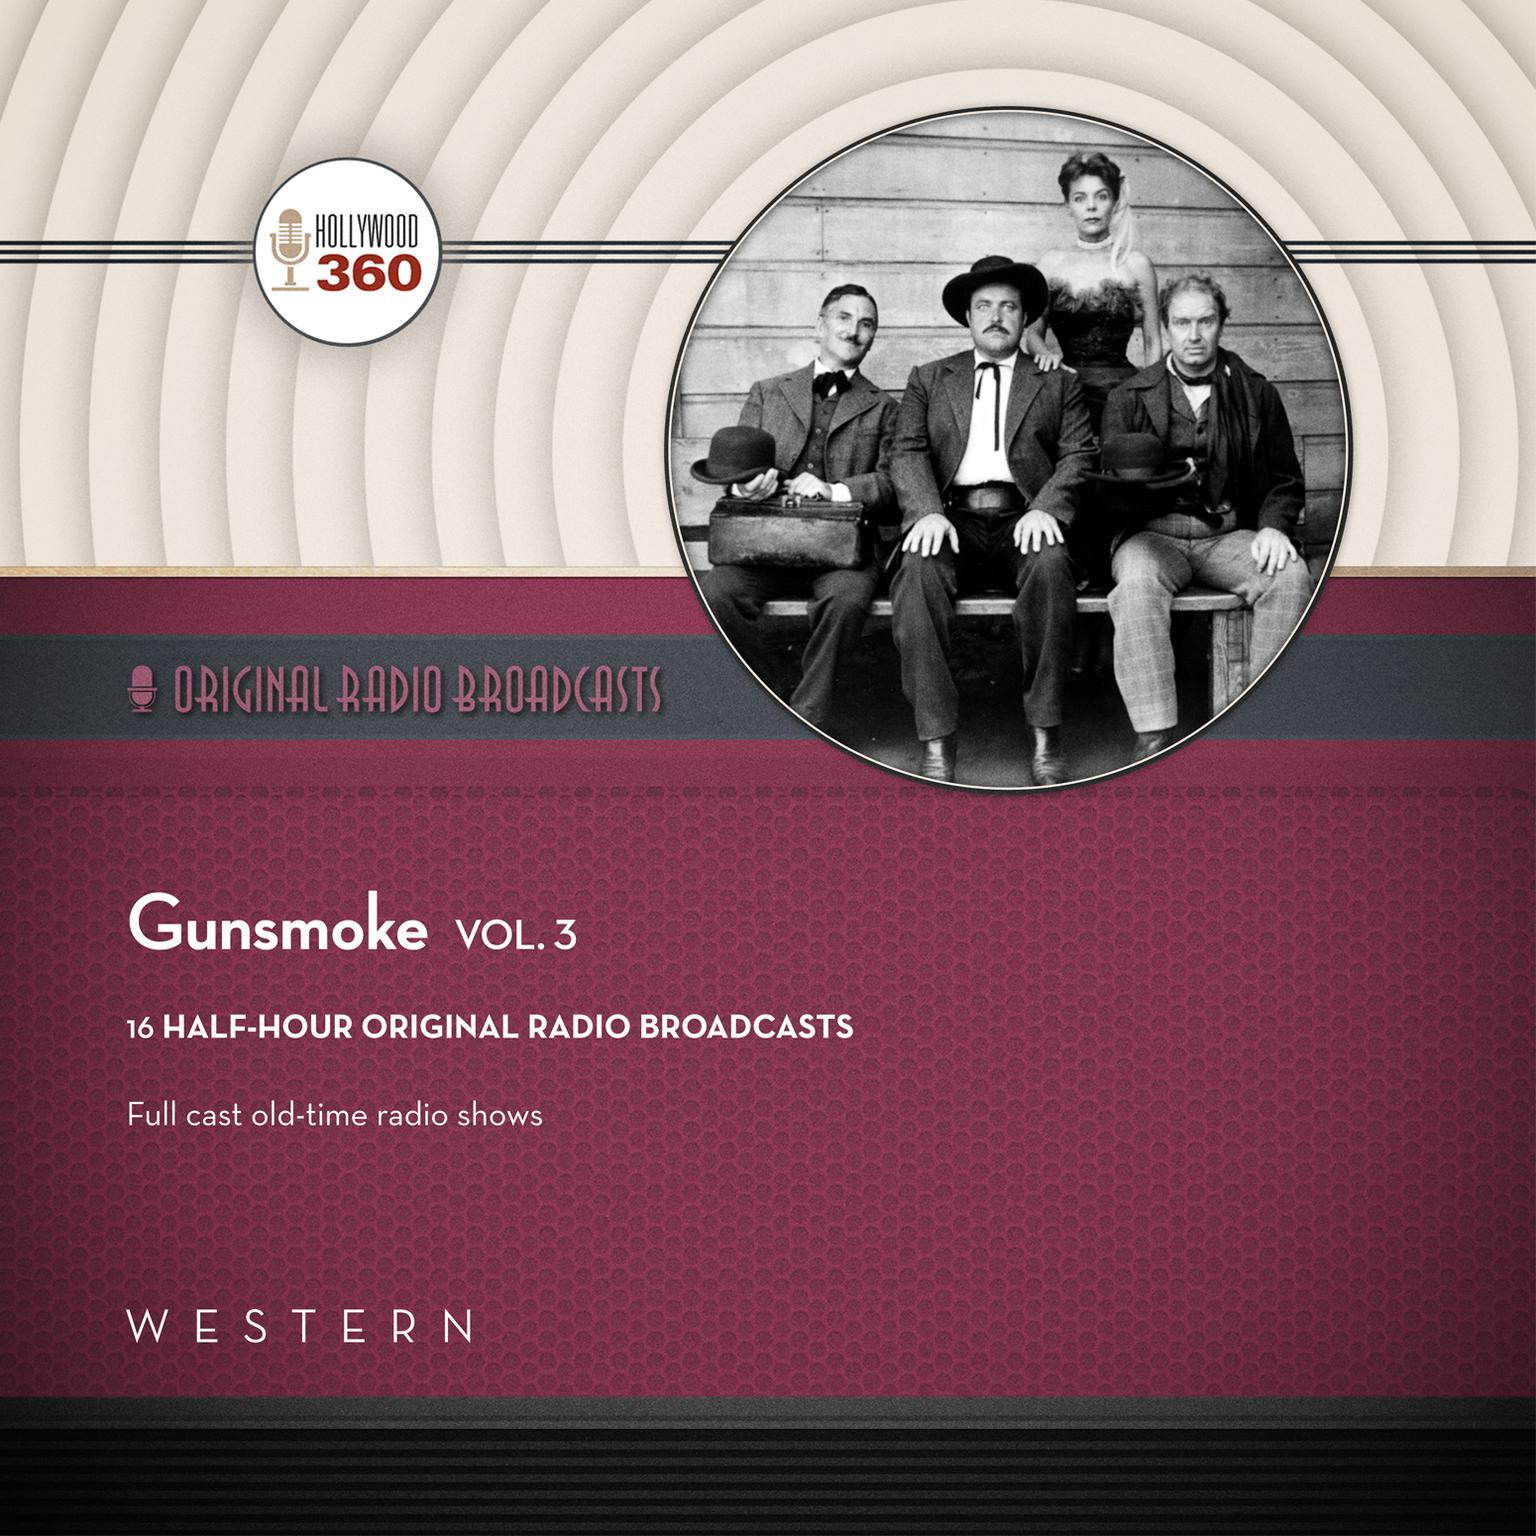 Gunsmoke, Vol. 3 Audiobook, by Black Eye Entertainment